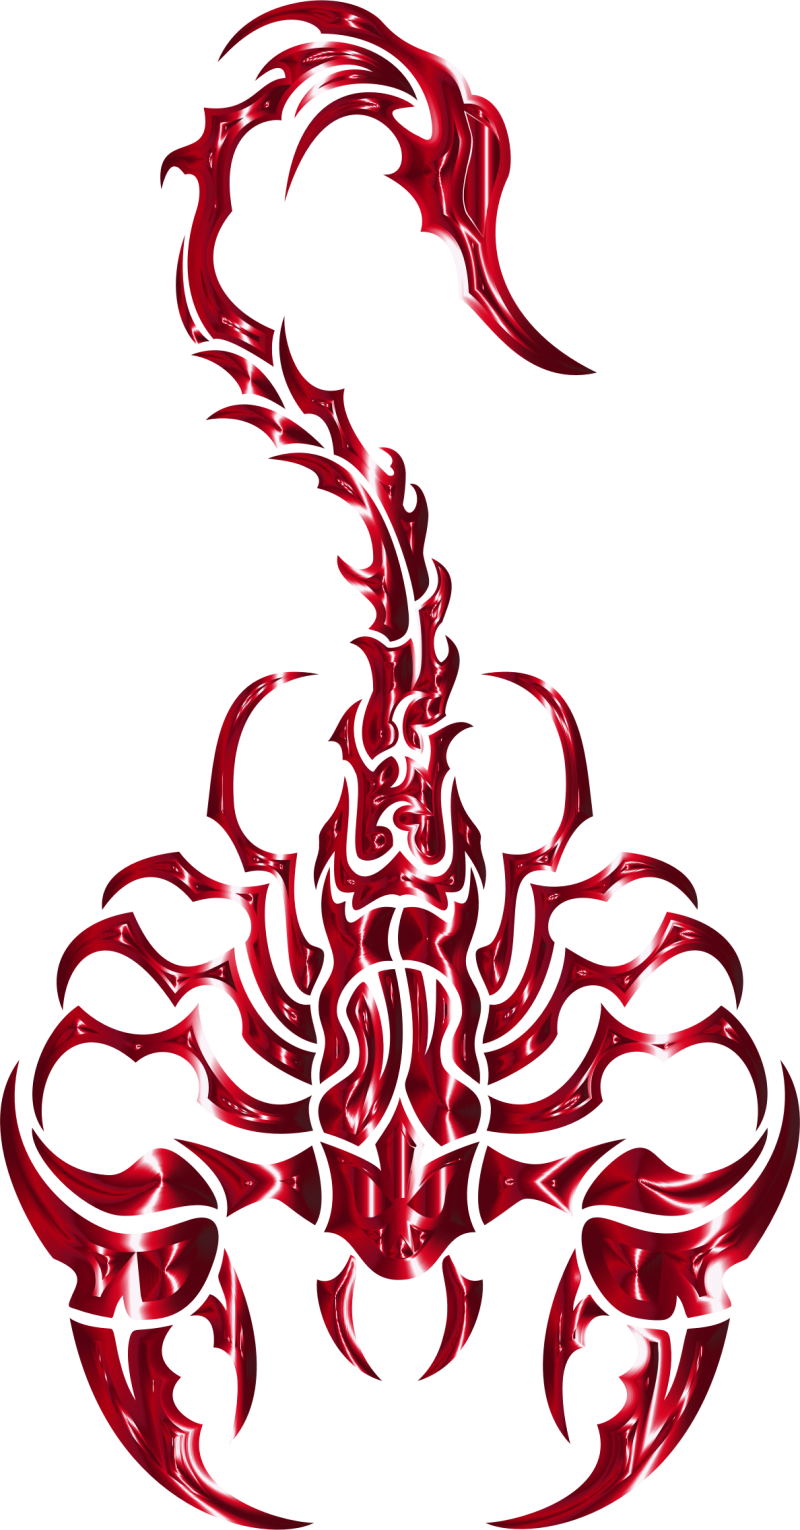 Red Scorpio Symbol PNG Image - PurePNG | Free transparent CC0 PNG Image ...